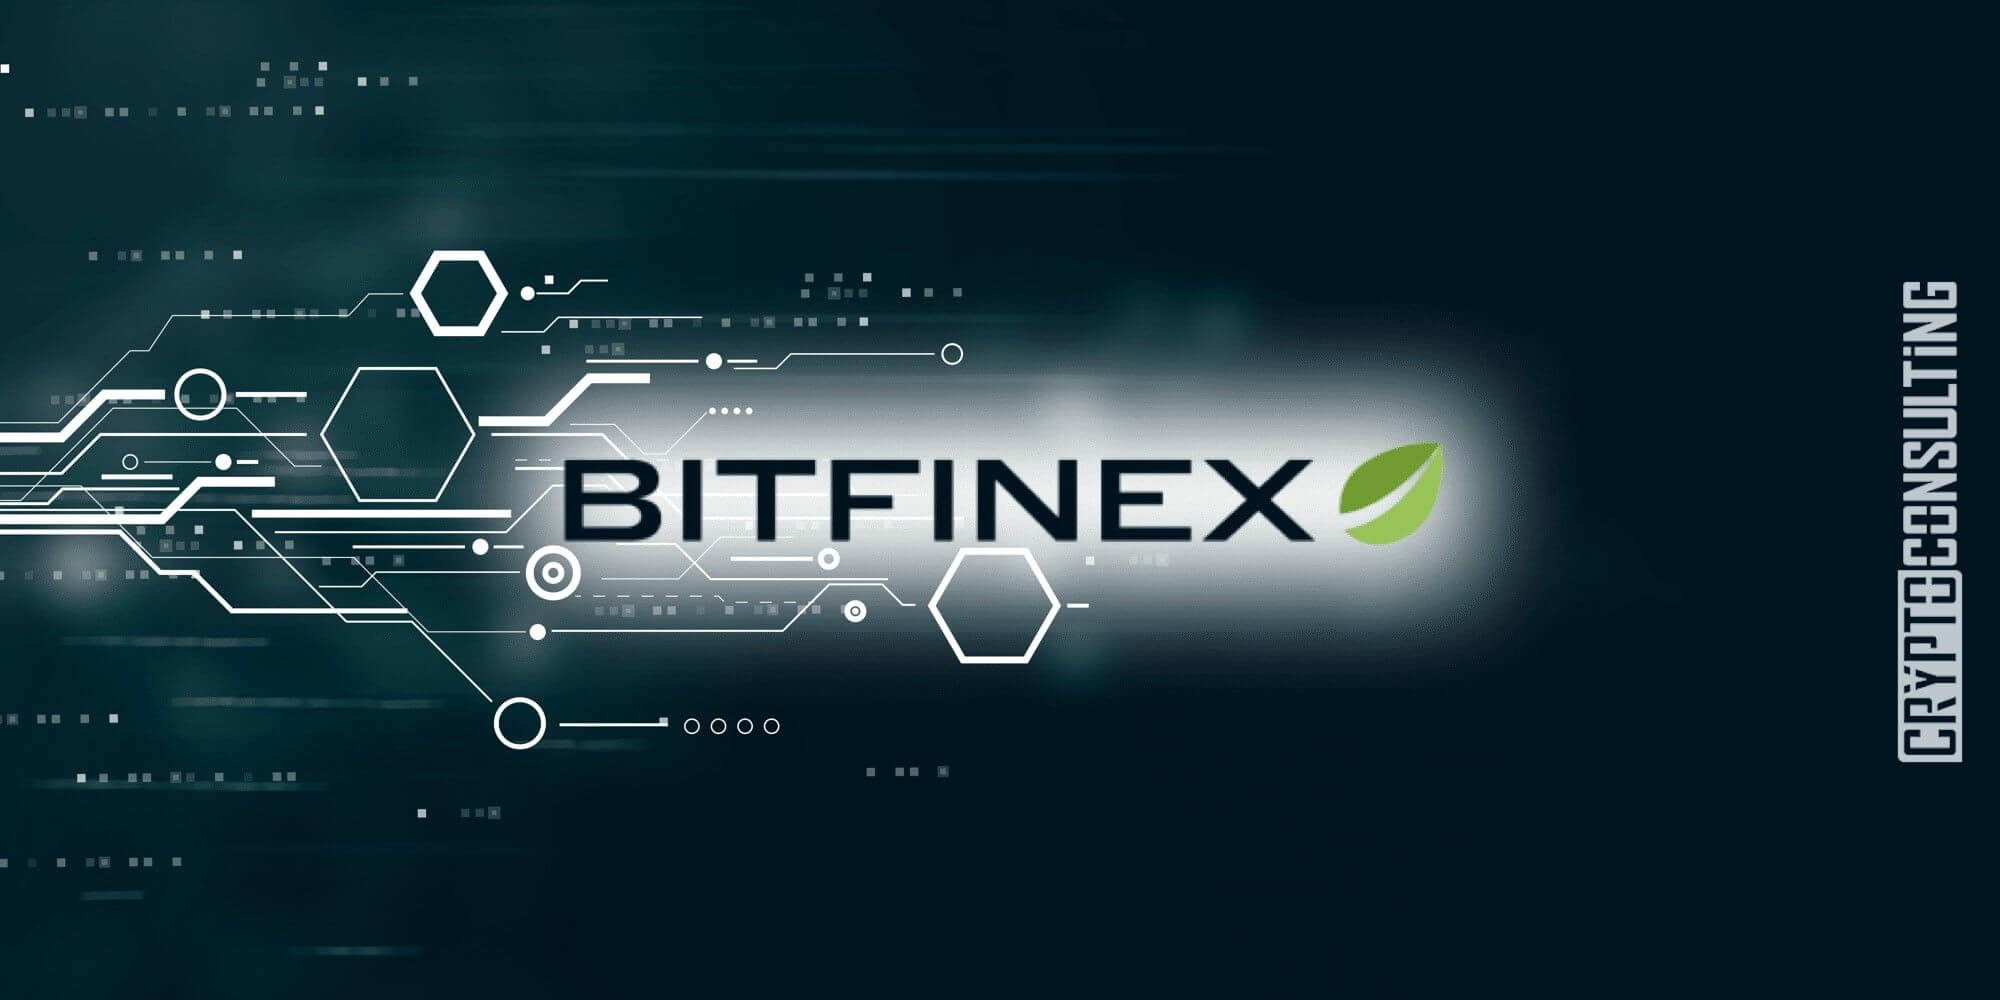  salvador bitfinex coupon offers million period investor 